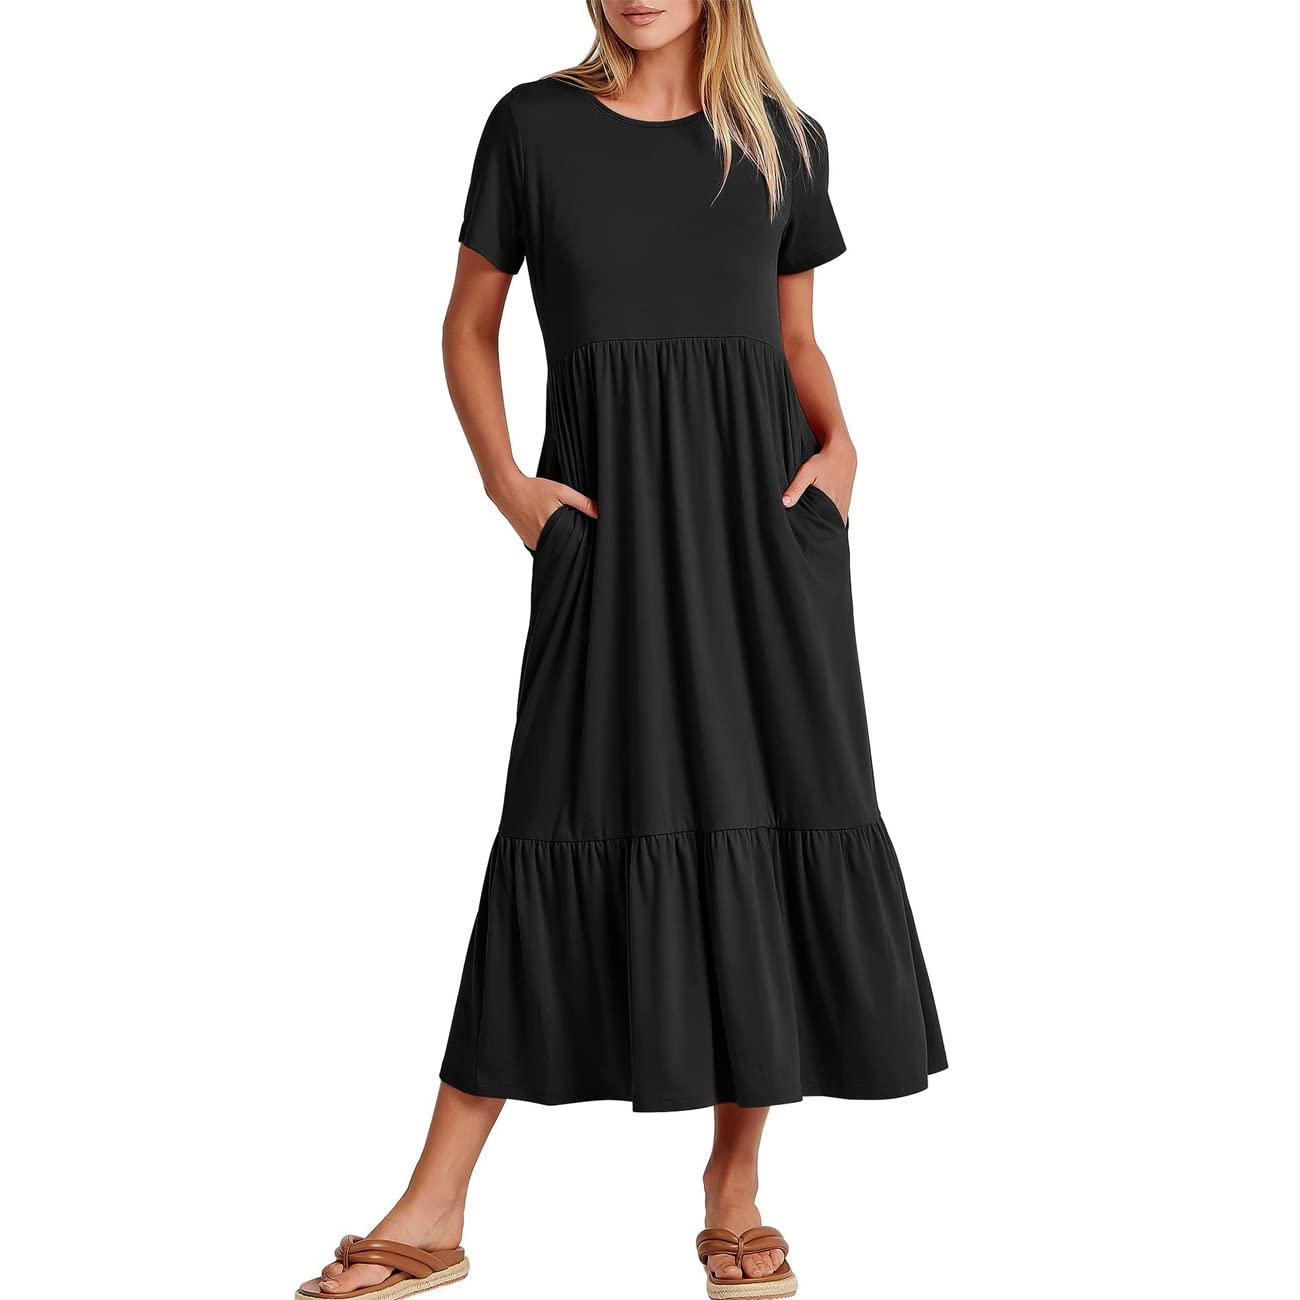 KOEMCY Women's Casual Dress Summer Midi Maxi Dress Short Sleeve Round Neck Dresses High Waist Tiered A Line Beach Dresses Sun Dress Swing Dress with Pockets (Black,S)